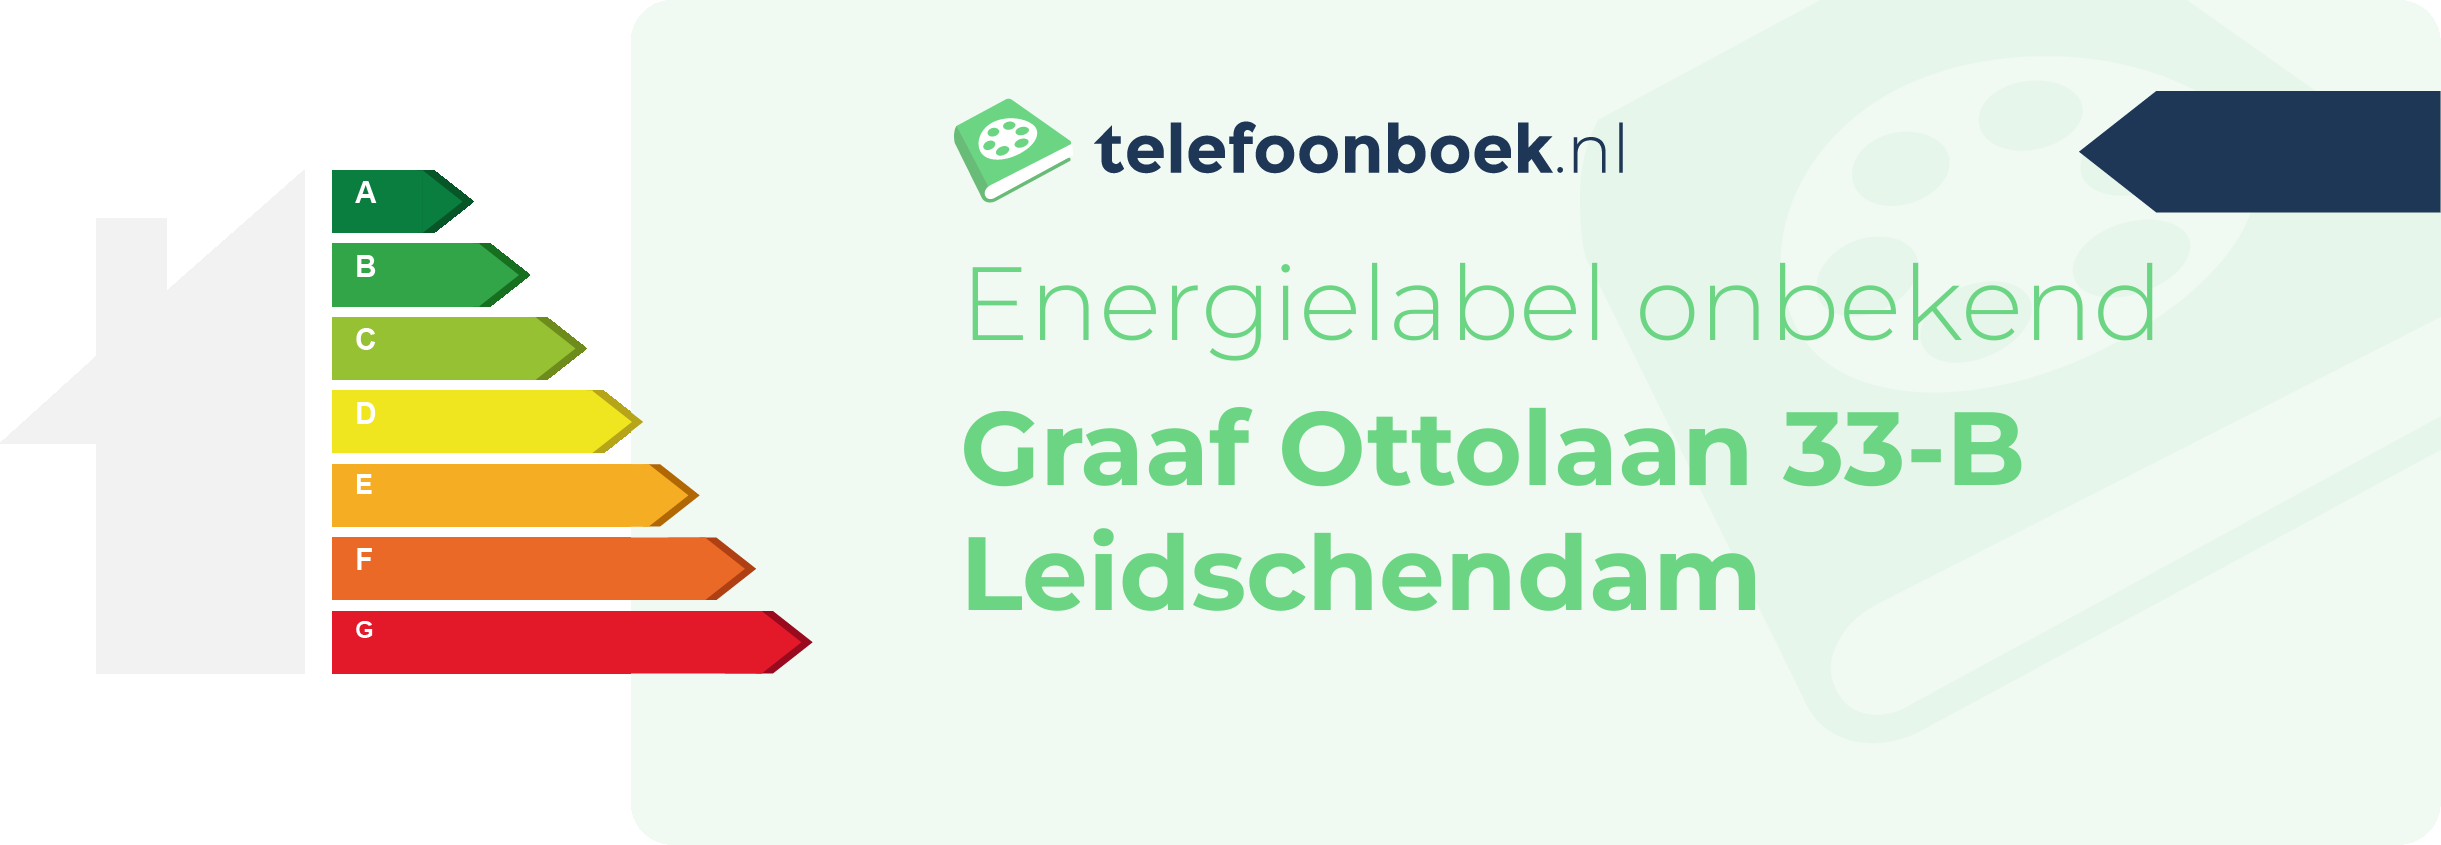 Energielabel Graaf Ottolaan 33-B Leidschendam